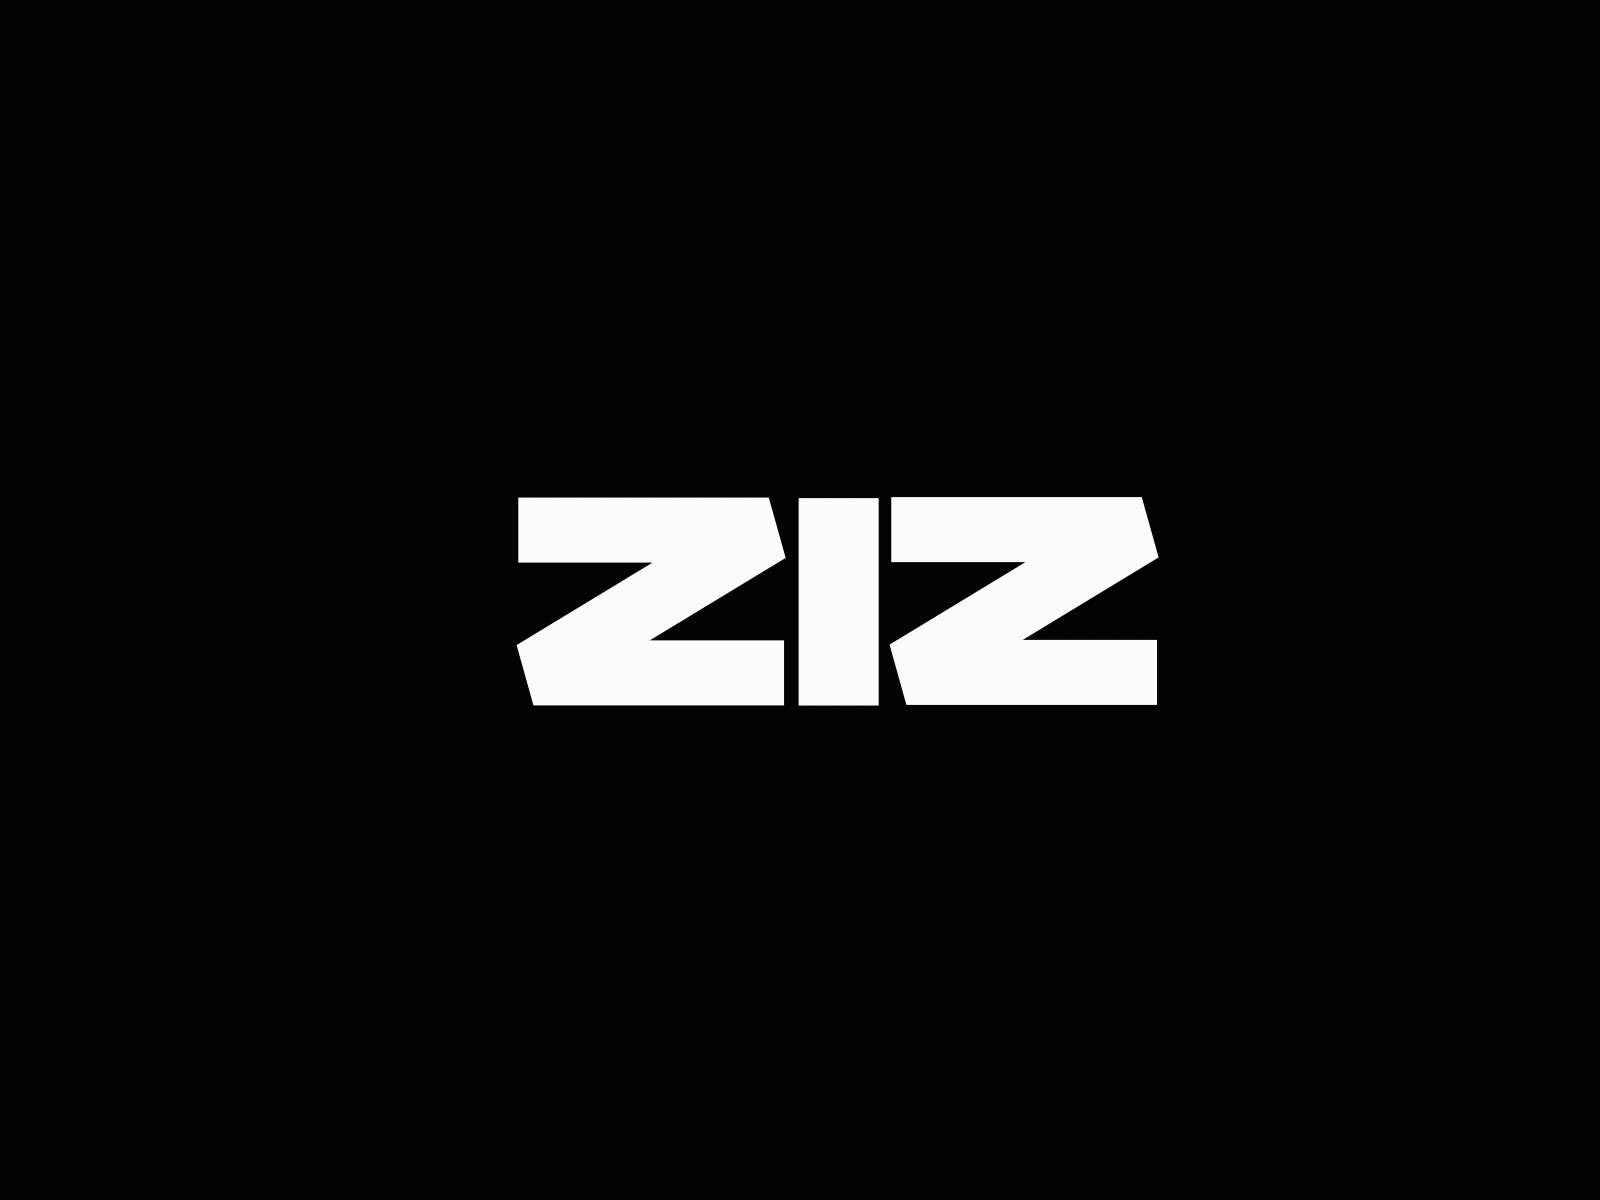 ZIZ Logo Animation